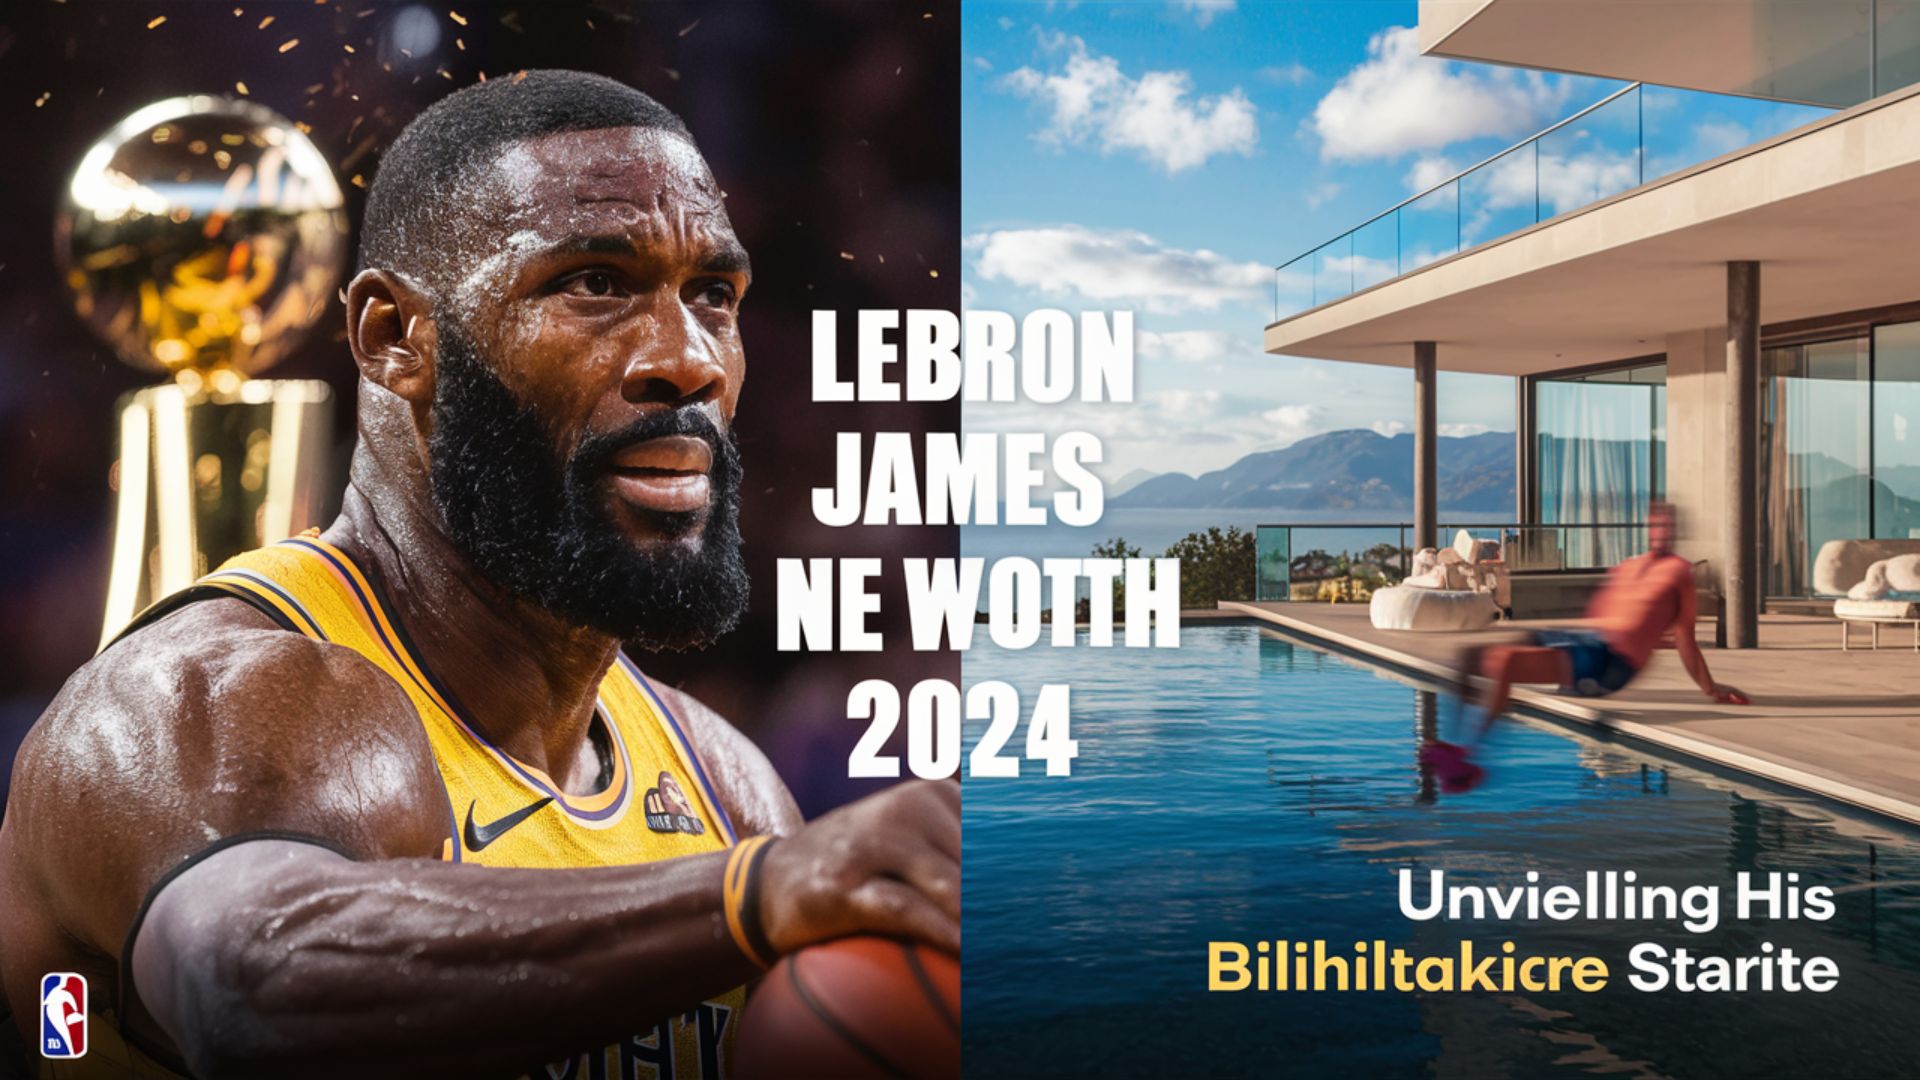 LeBron James Net Worth 2024